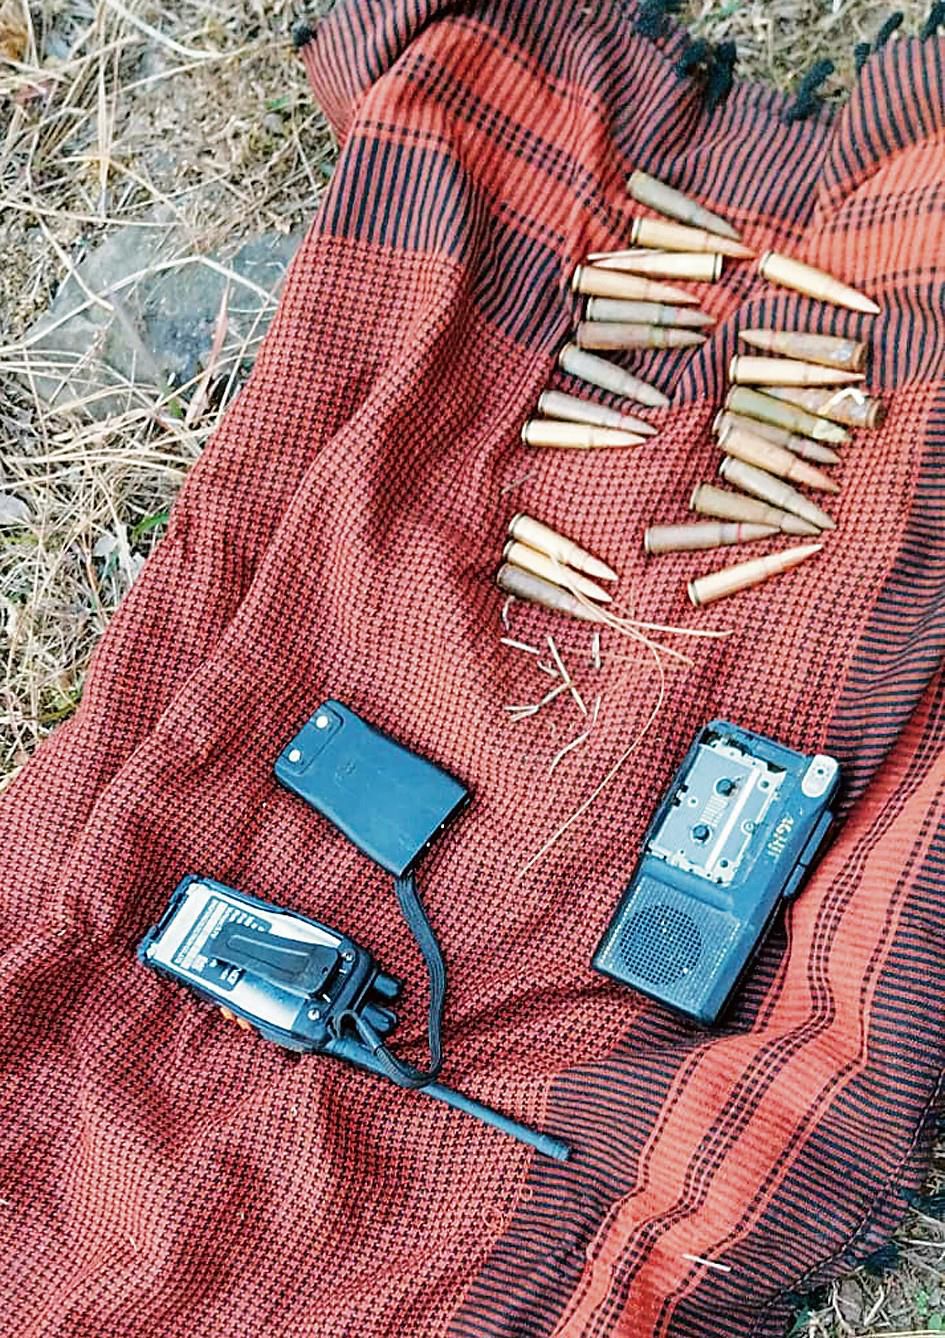 Tiffin IEDs, wireless set, bullets seized in Rajouri